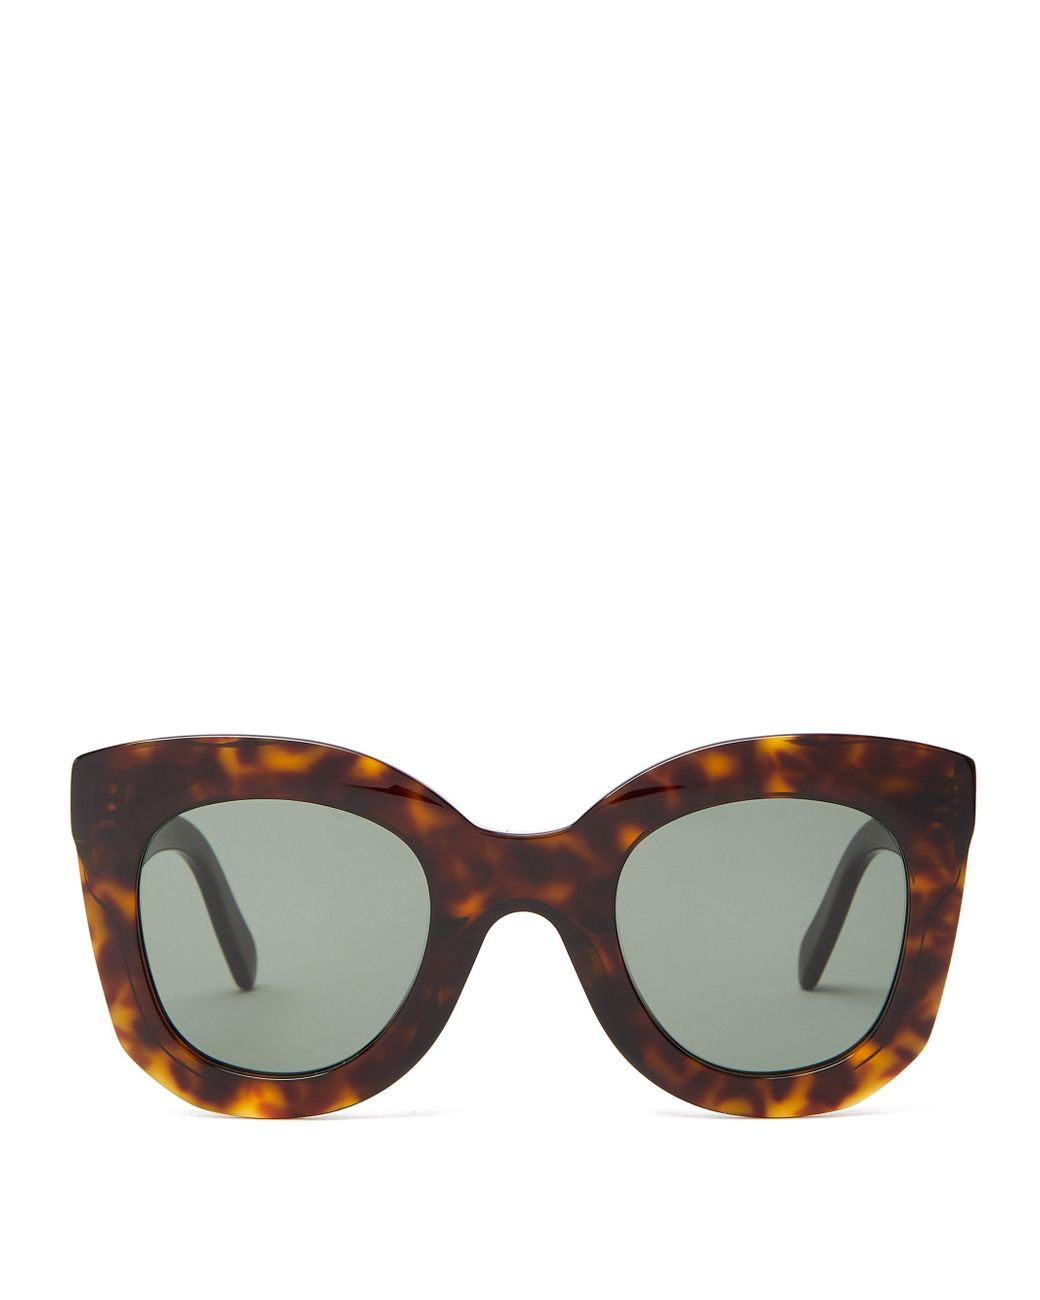 Celine Oversized Round Tortoise-acetate Sunglasses in Brown - Lyst